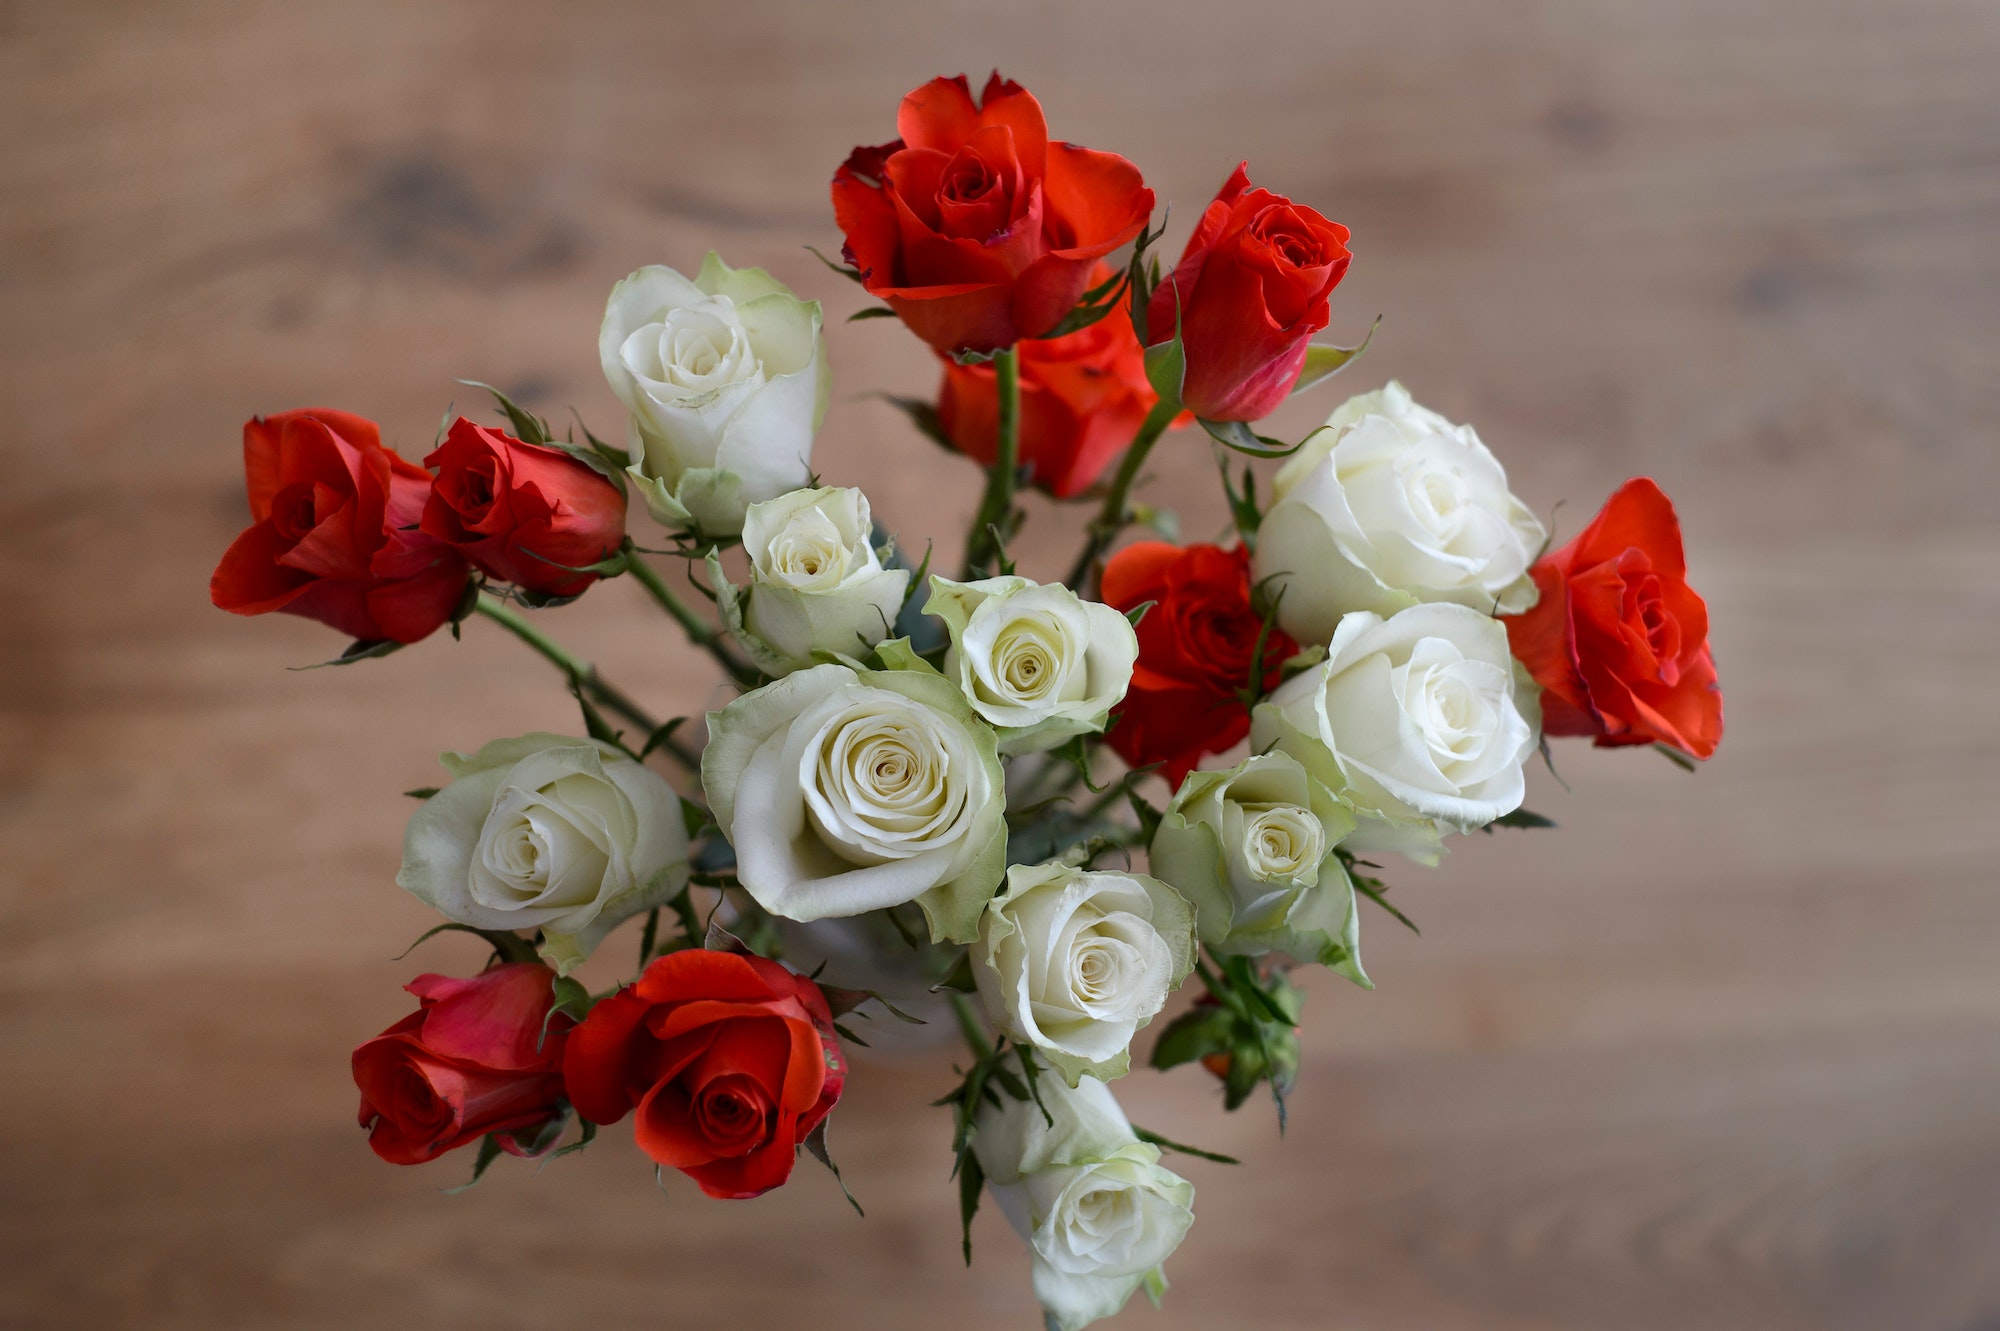 Biele a červené ruže v kytici